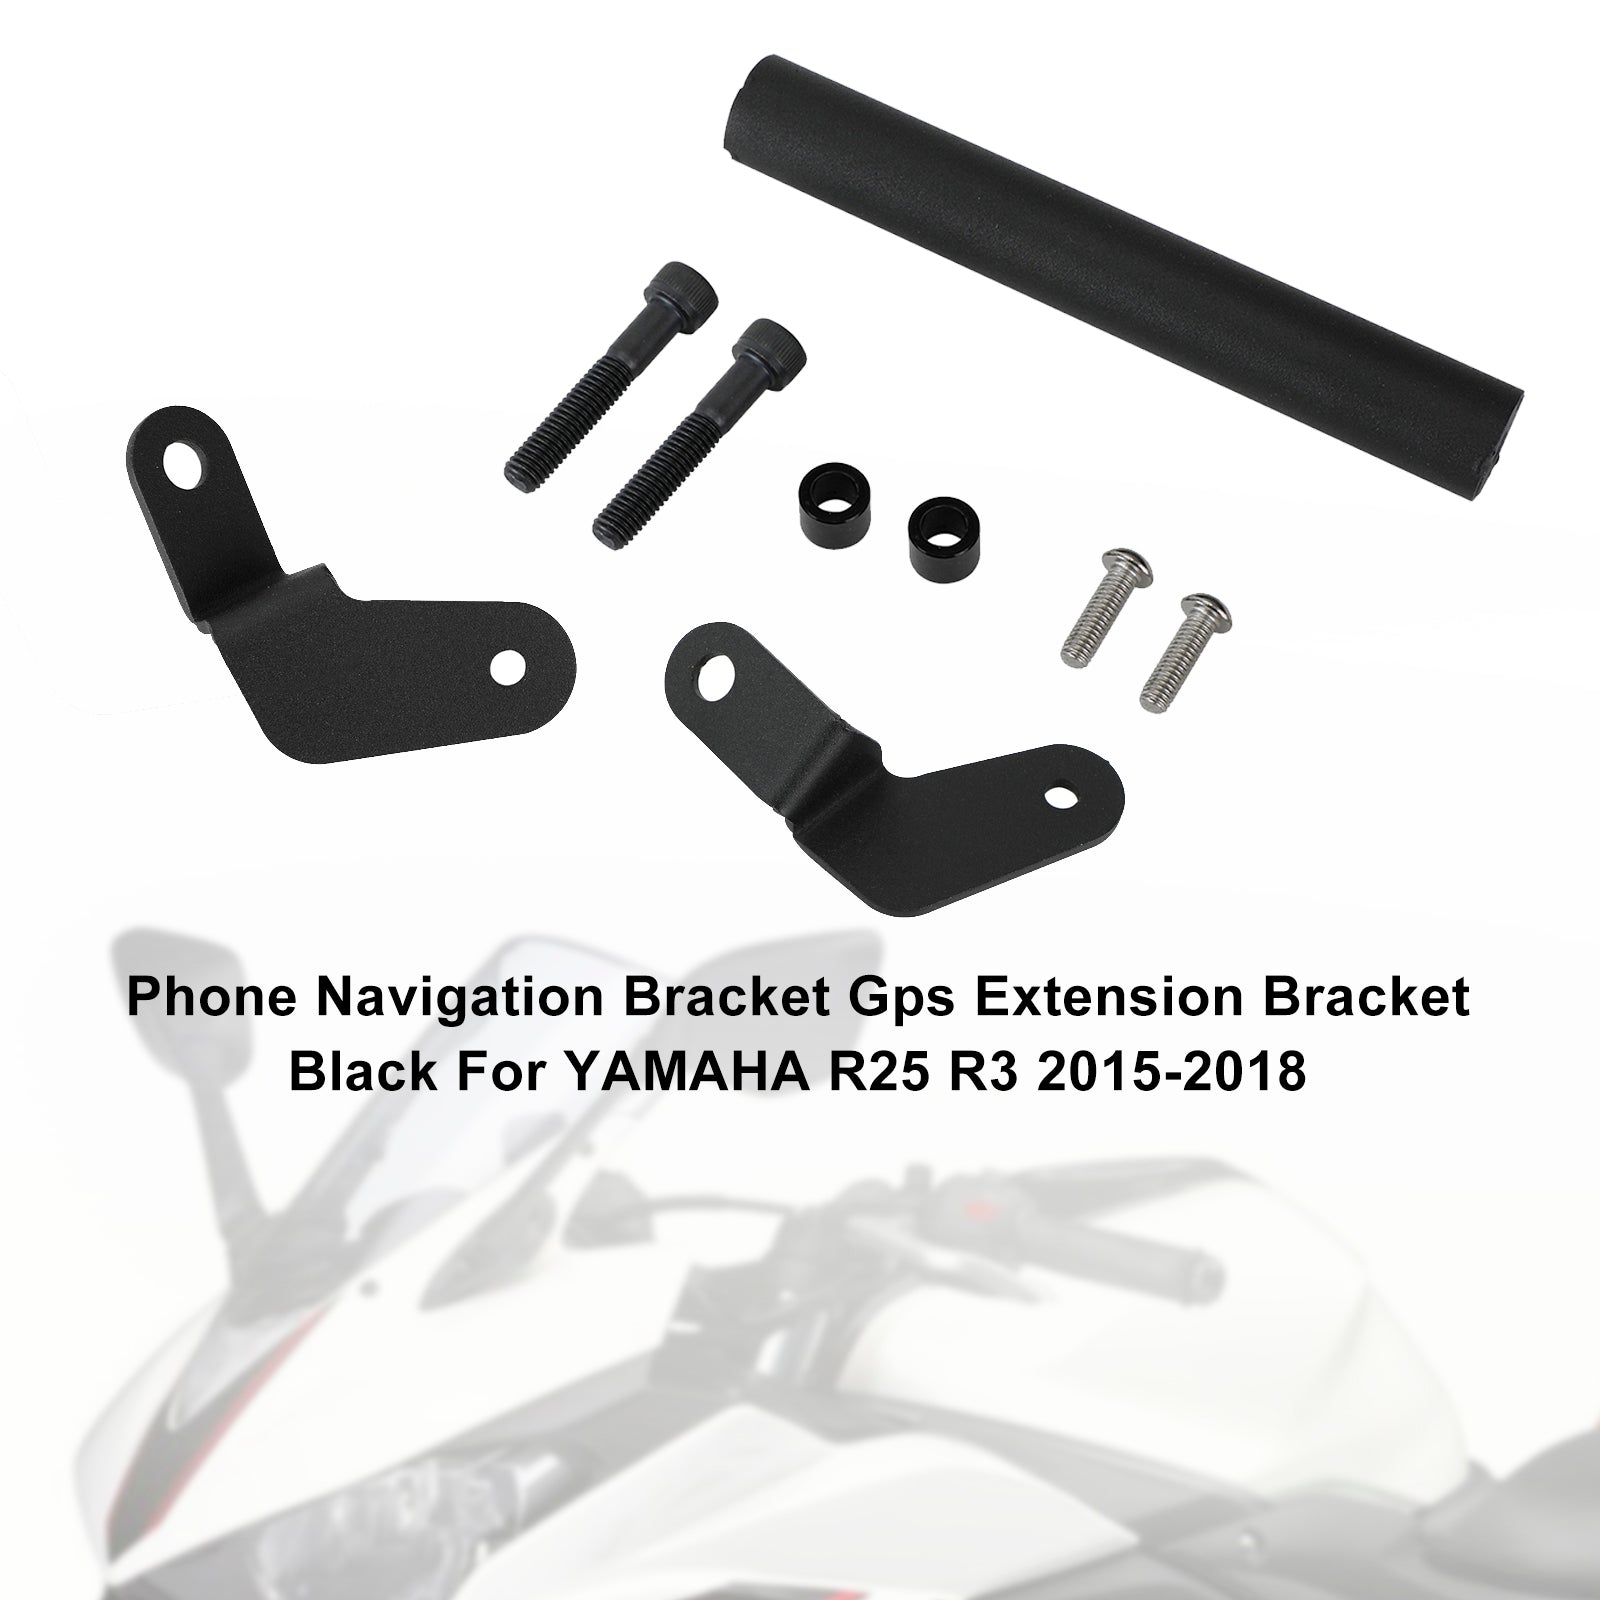 Navigation Bracket Phone Gps Bracket Black Fits For Yamaha R25 R3 2015-2018